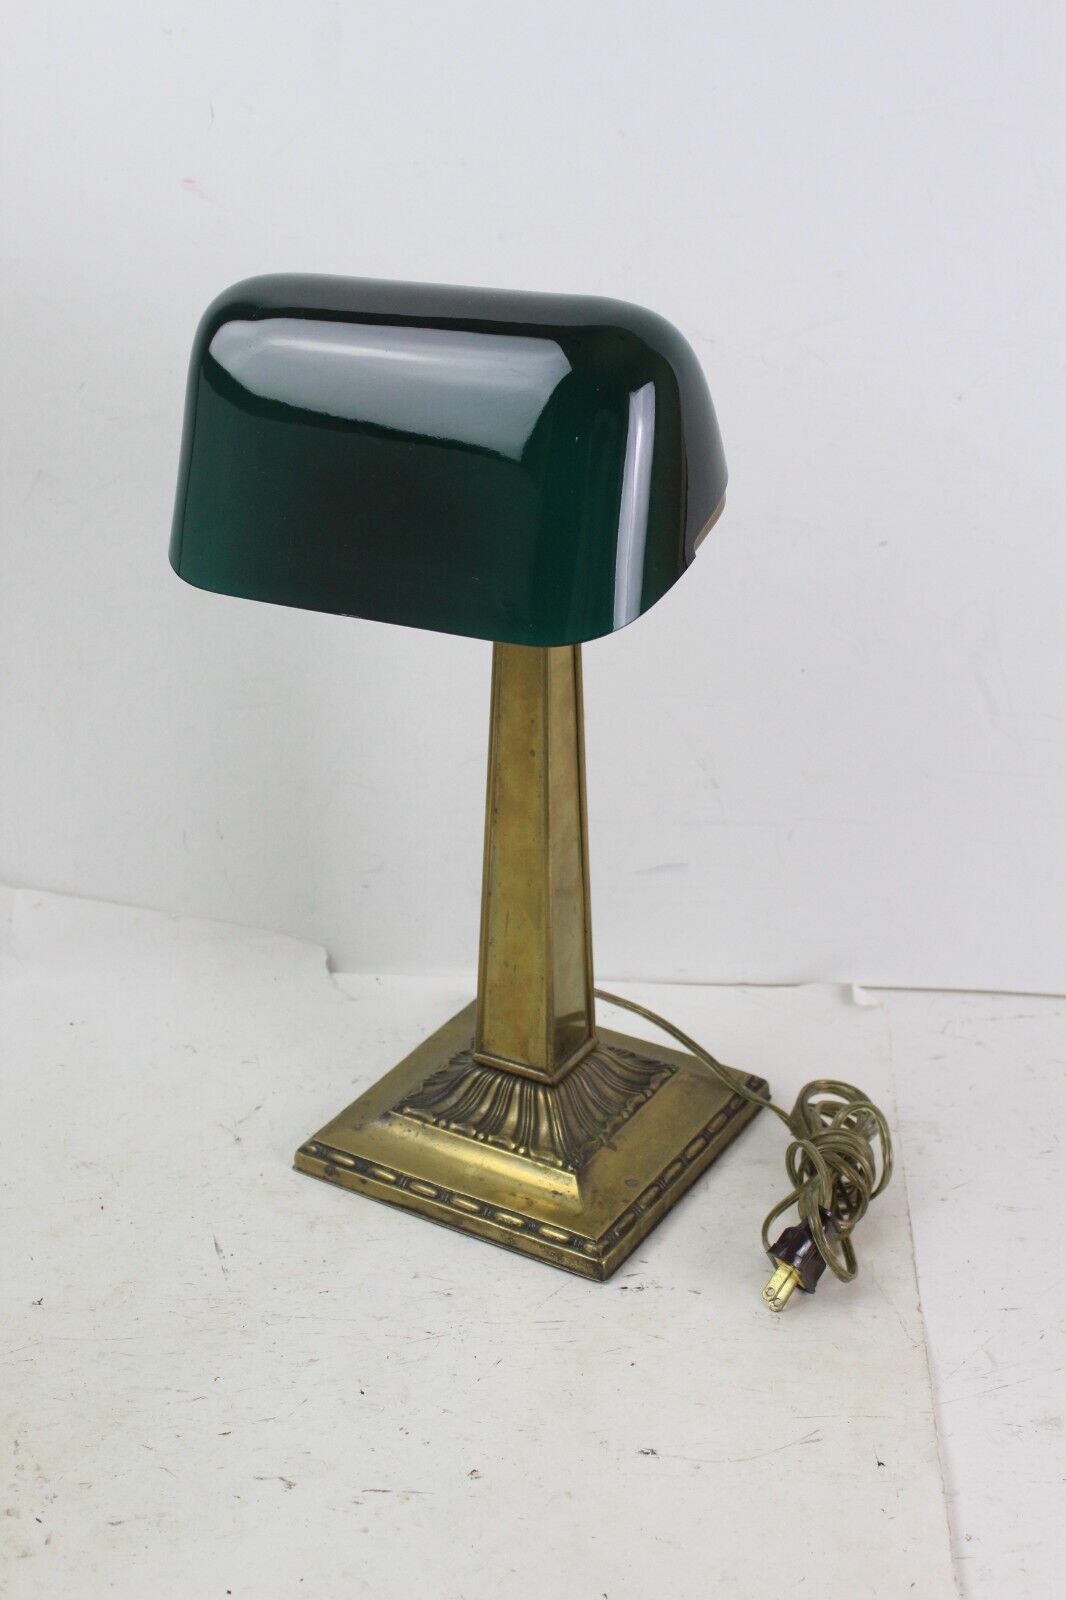 Genuine Tall Emeralite Adjustable Bankers Desk Lamp Green Glass Shade Model 87